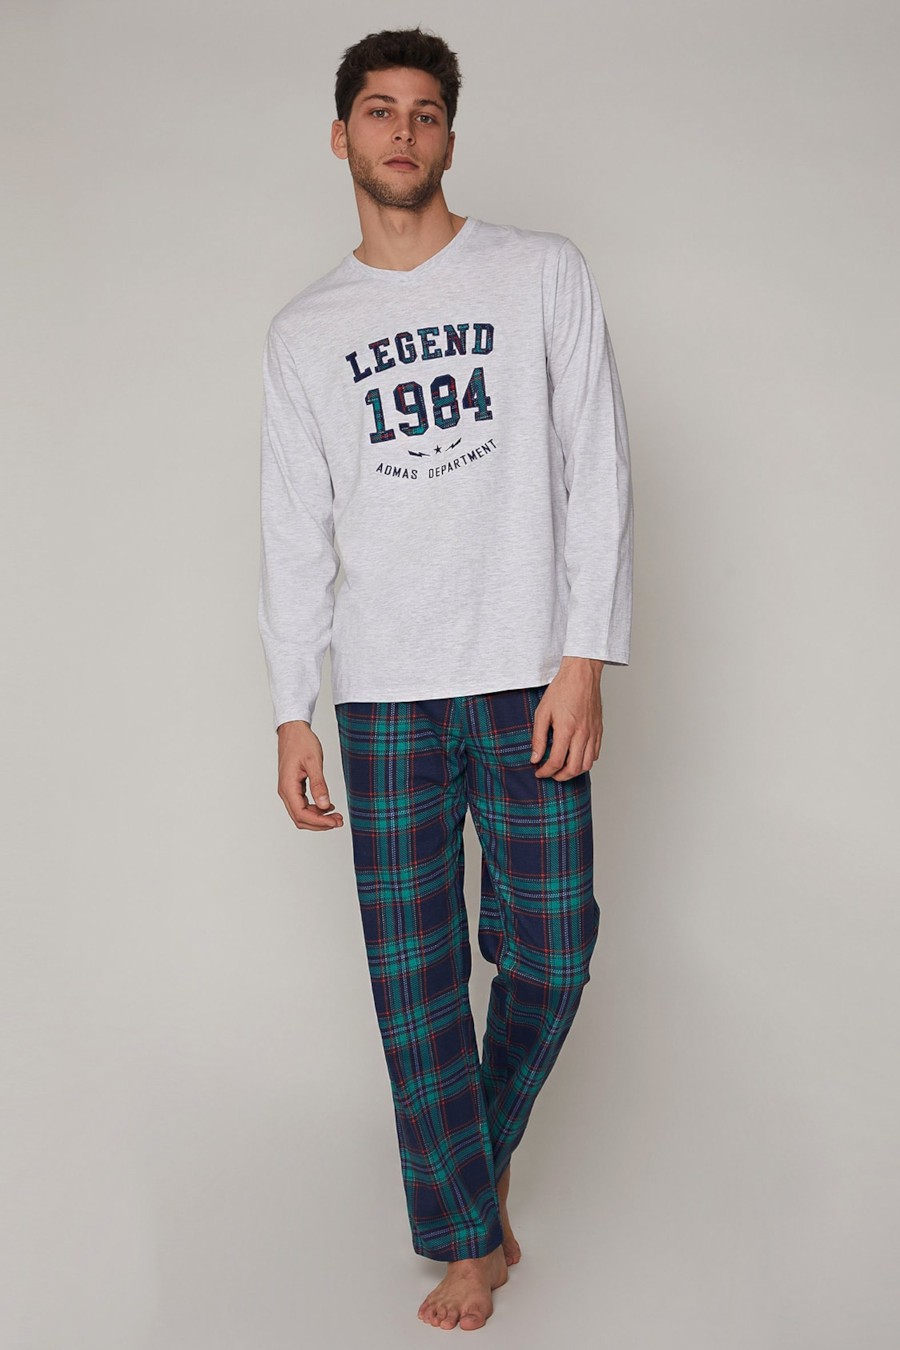 cultuur Eigen bevestigen Admas Men's home suit jumper and trousers cotton with long sleeve Size M-XL  | eBay